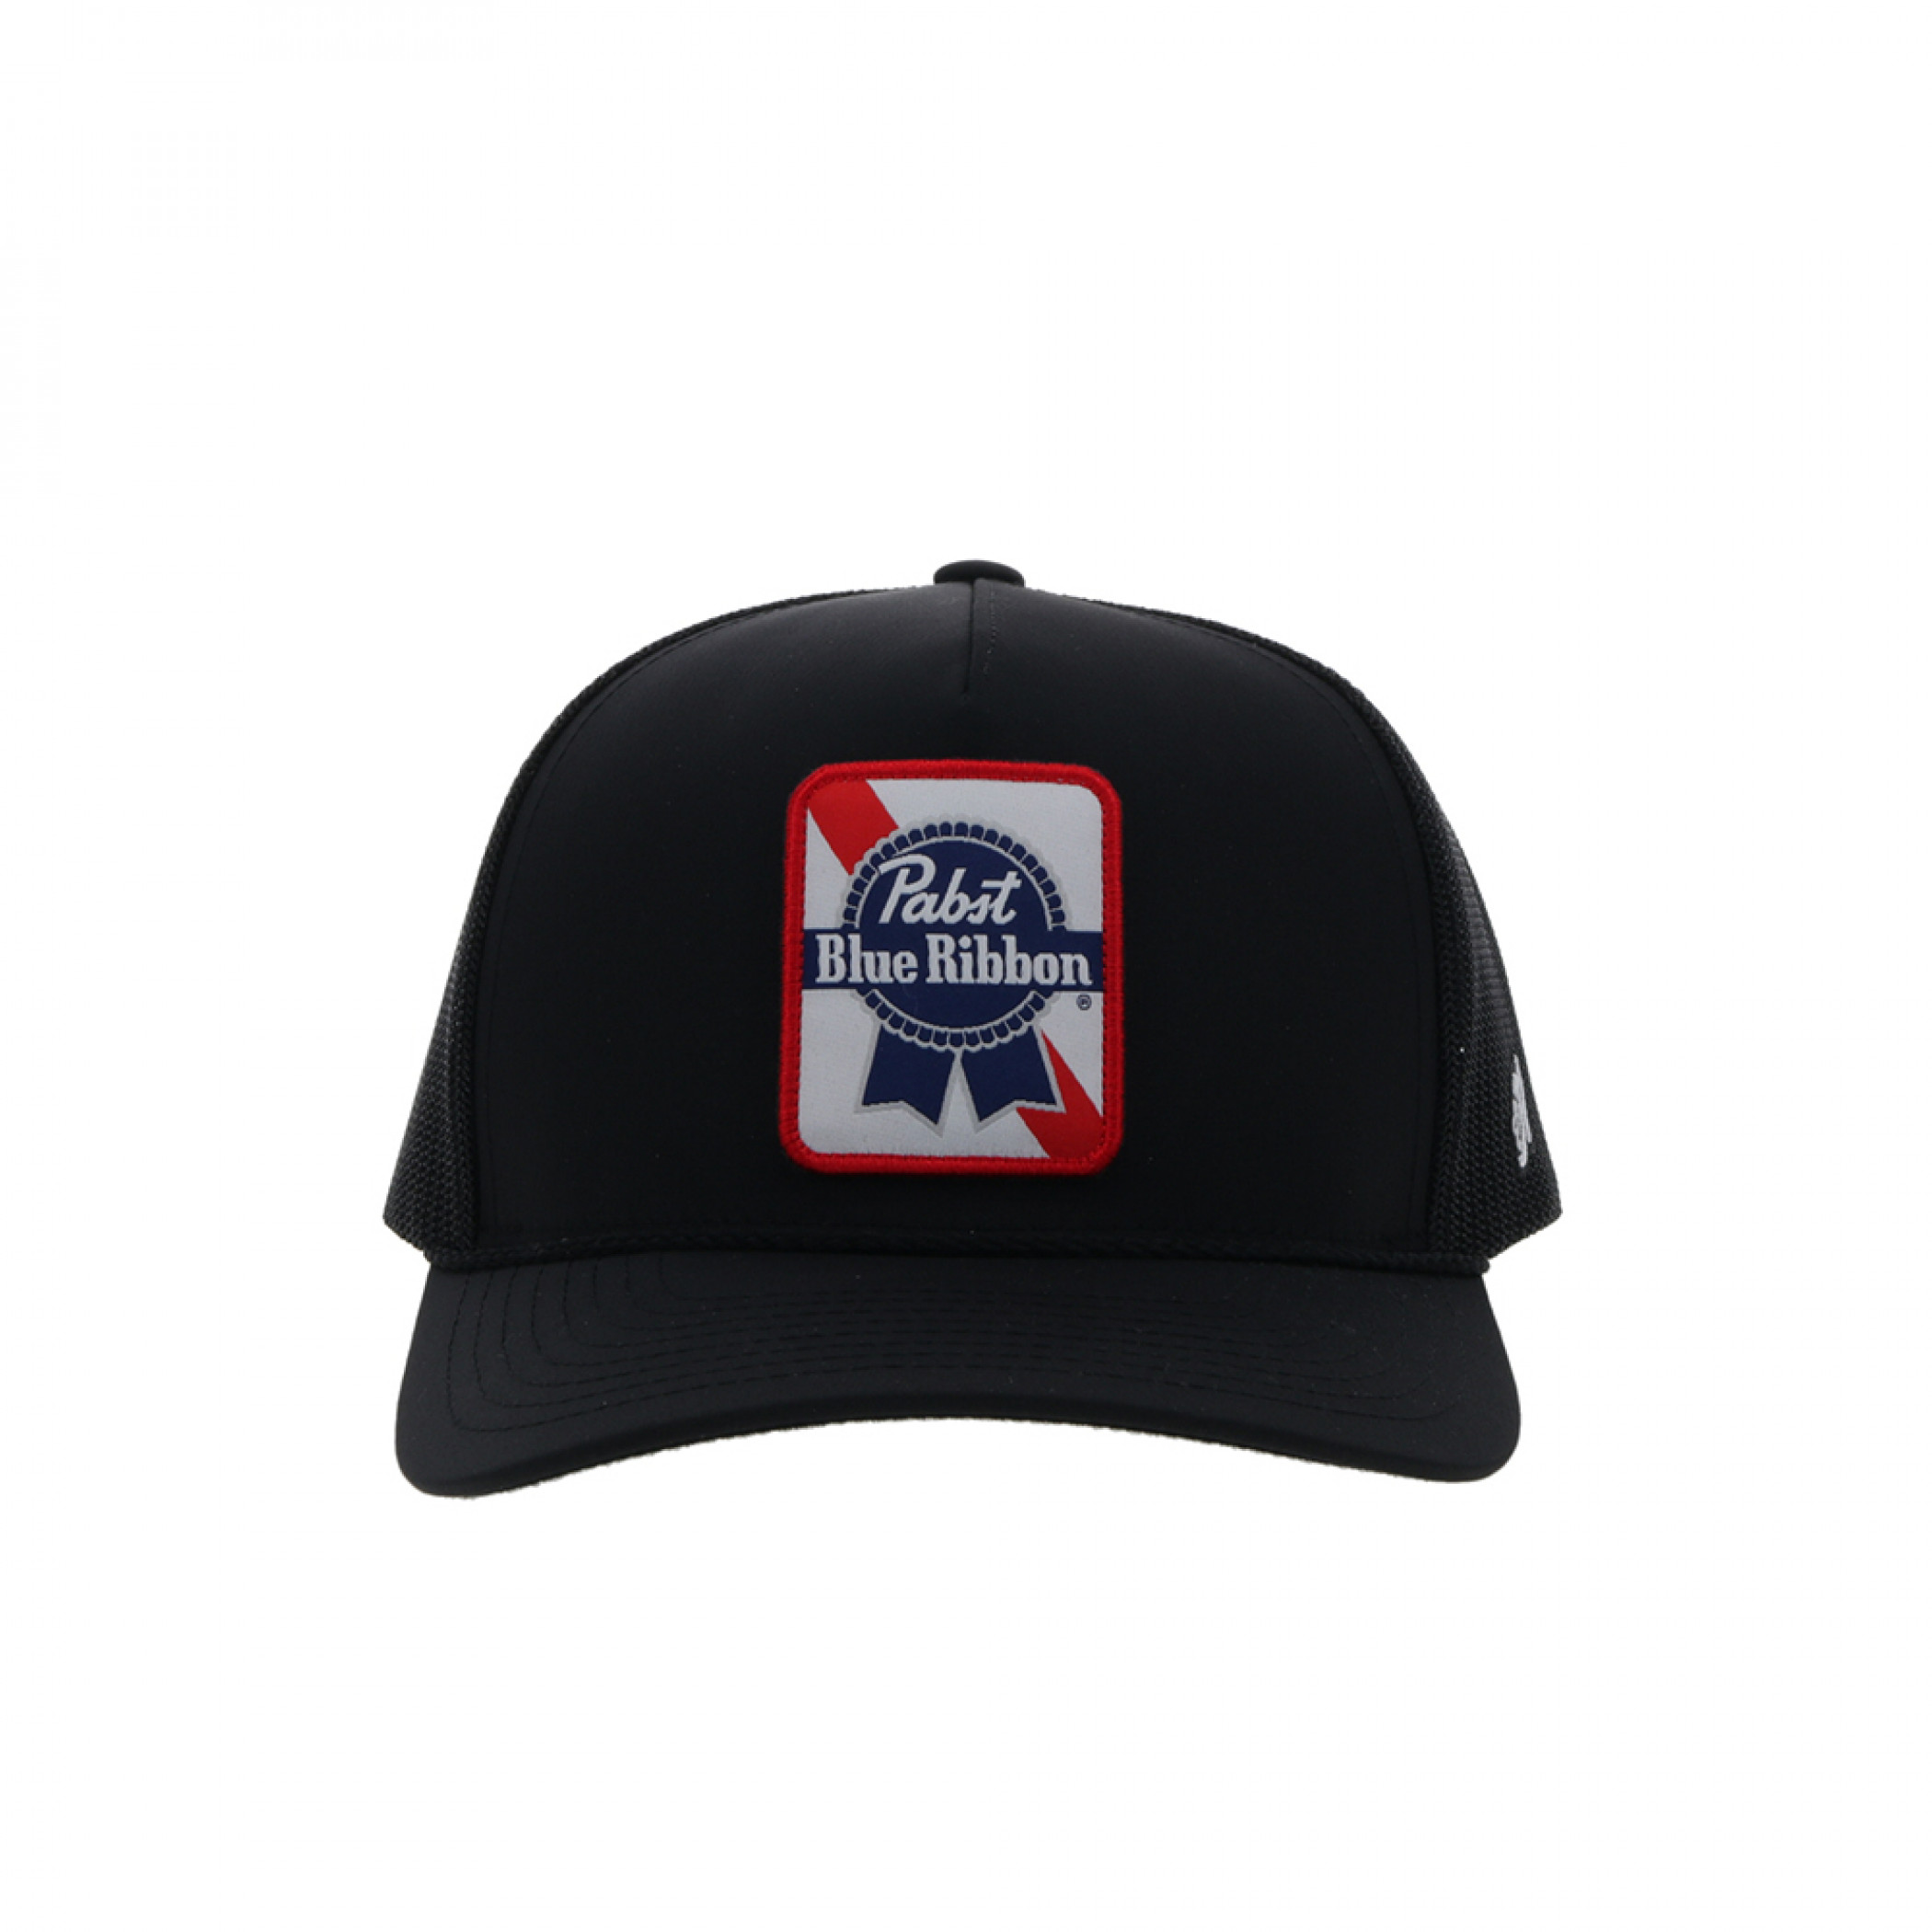 Pabst Blue Ribbon Classic Logo Patch Snapback Hybrid Bill Trucker Hat